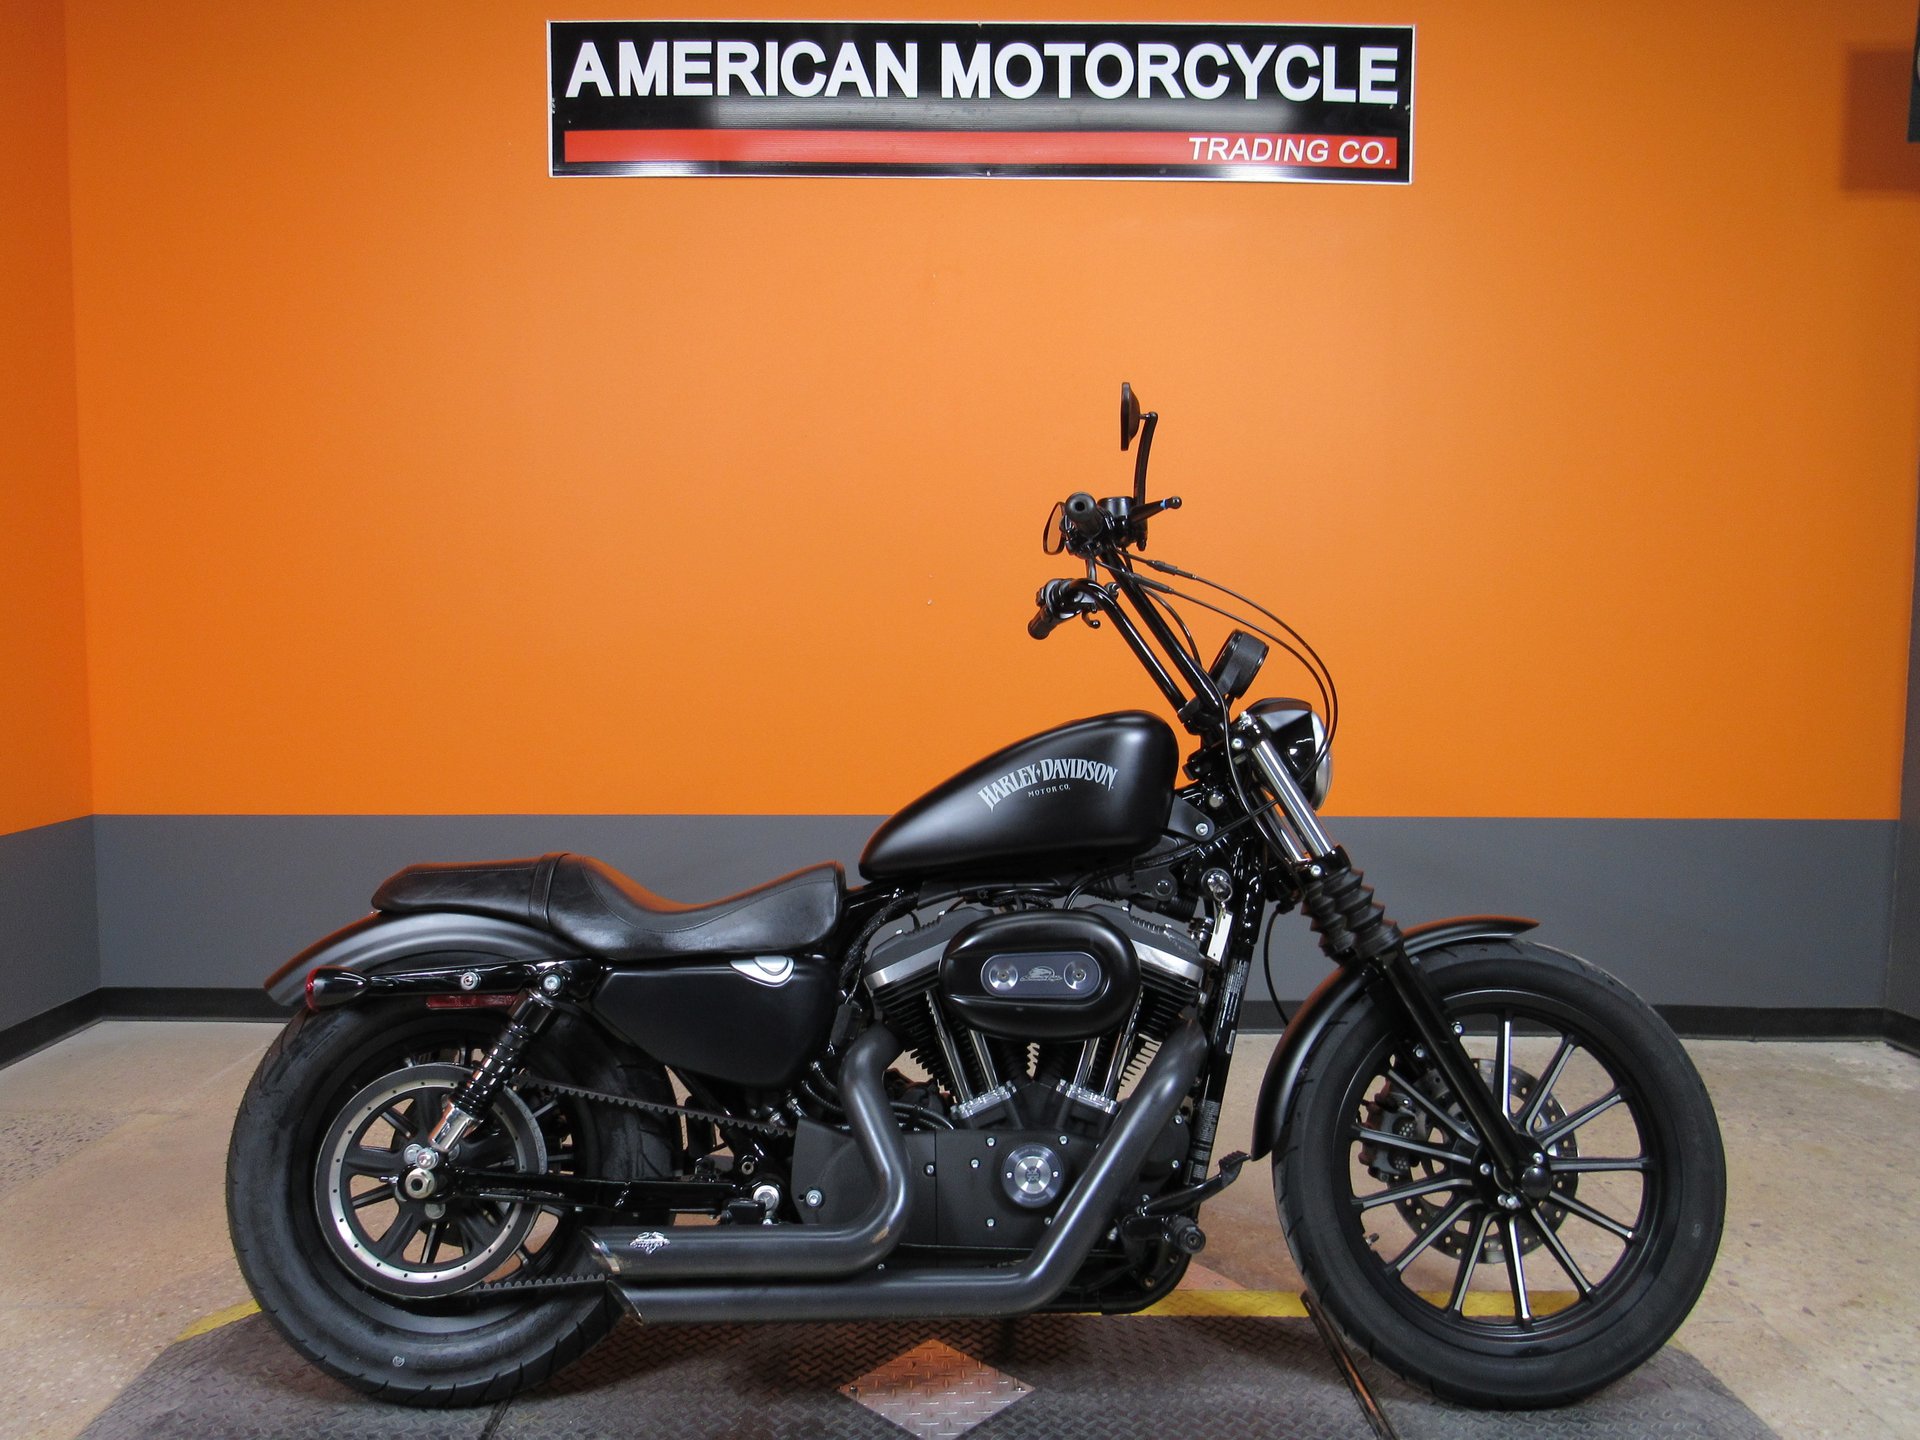 2014 Harley-Davidson Sportster 883 | American Motorcycle Trading Company -  Used Harley Davidson Motorcycles